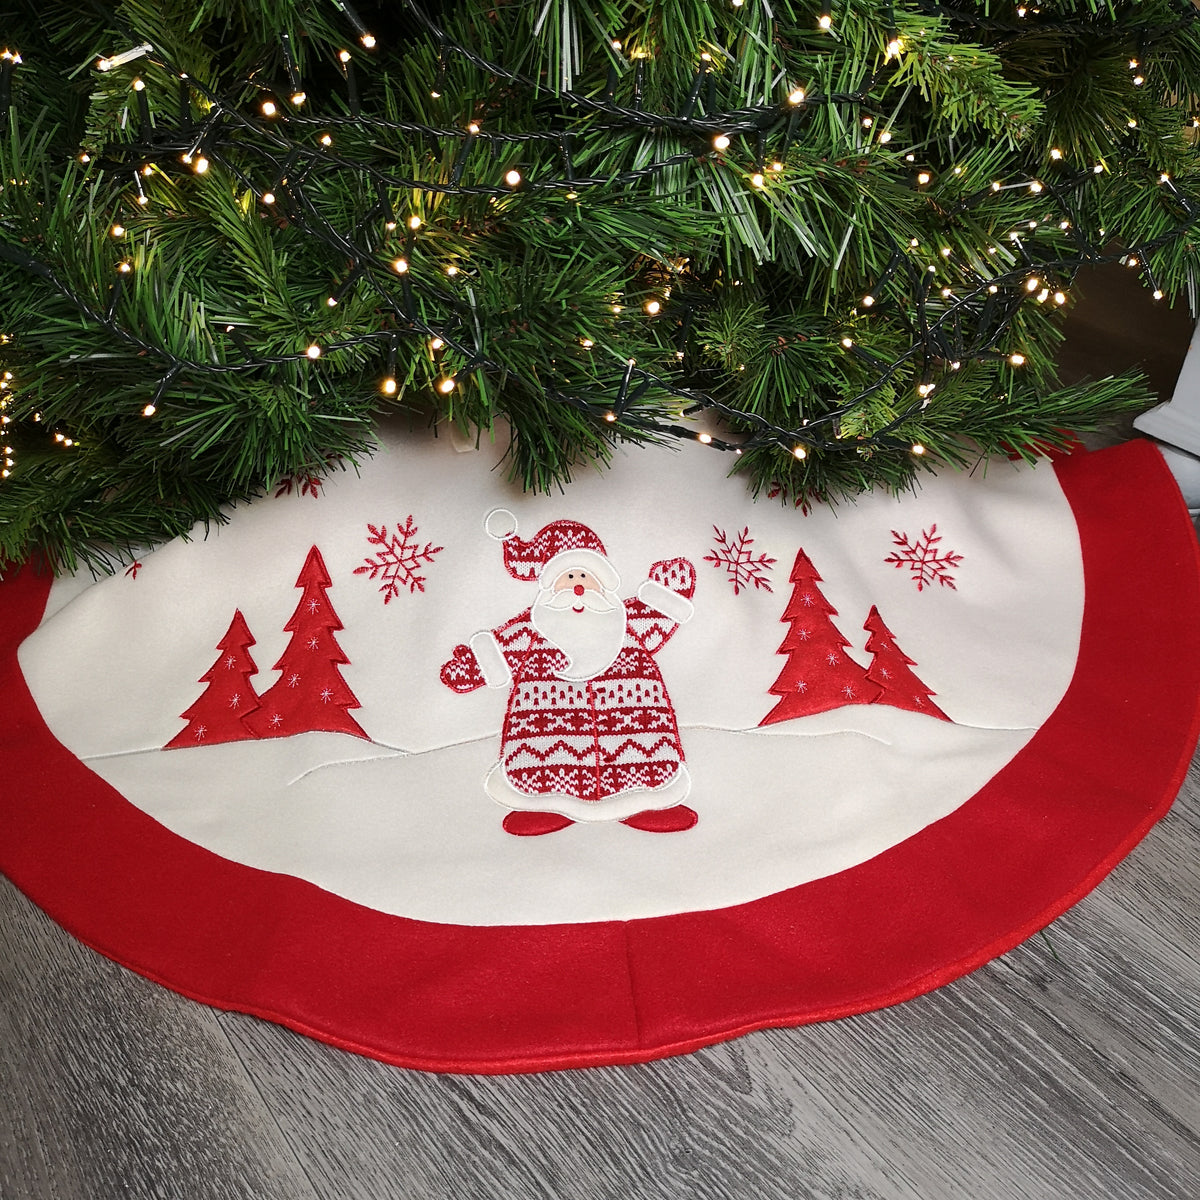 90cm Red & White Fabric Christmas Tree Skirt with Santa Scene & Snowflakes